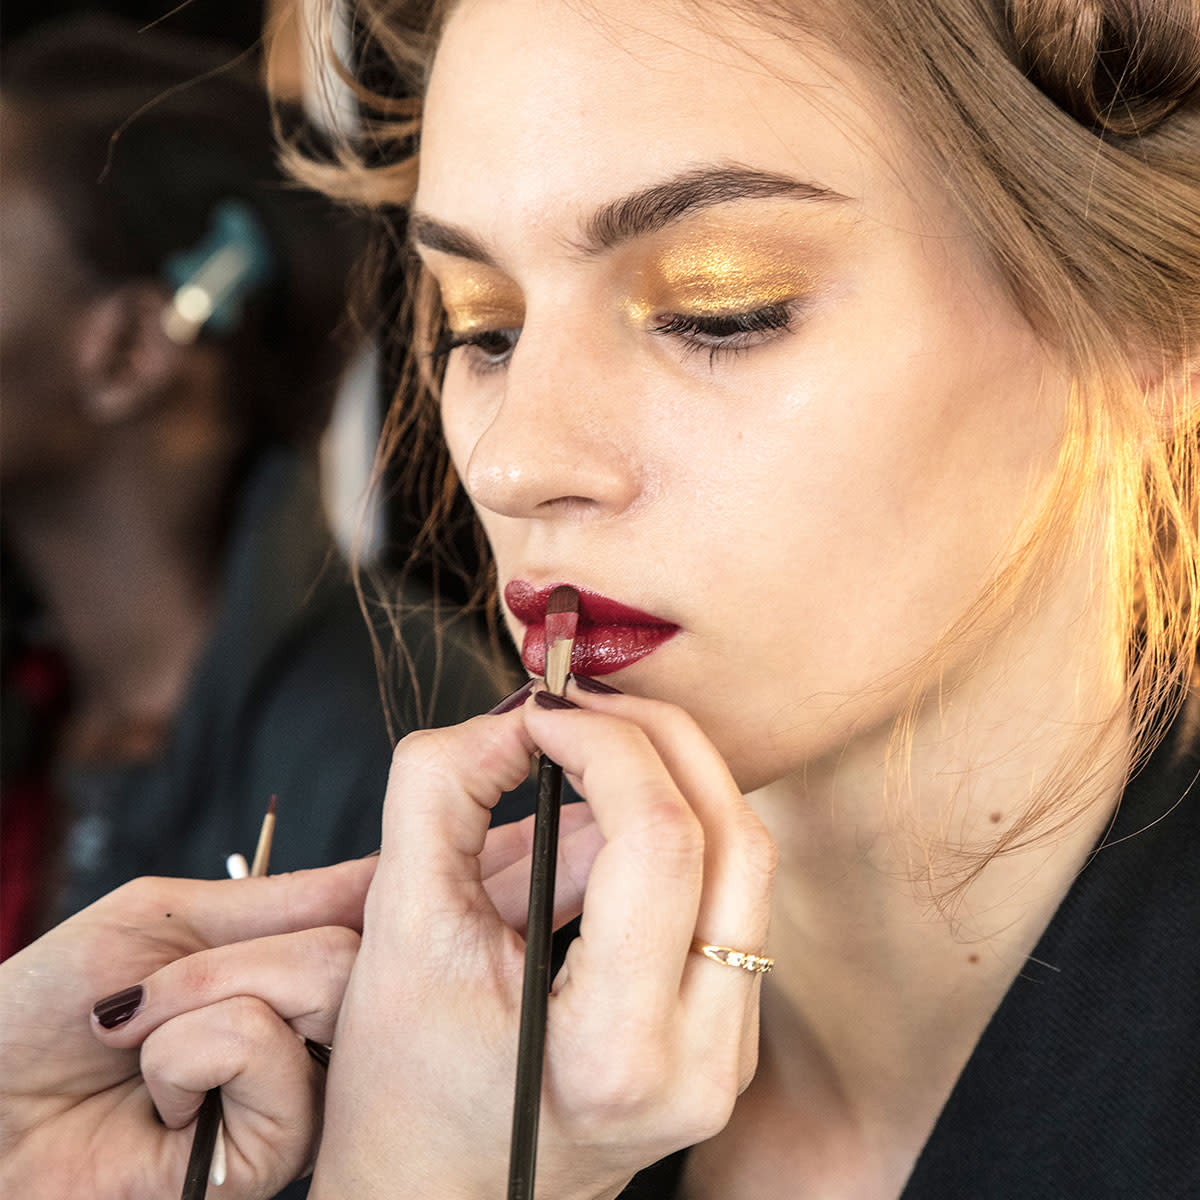 makeup-artist-applying-dark-red-lipstick